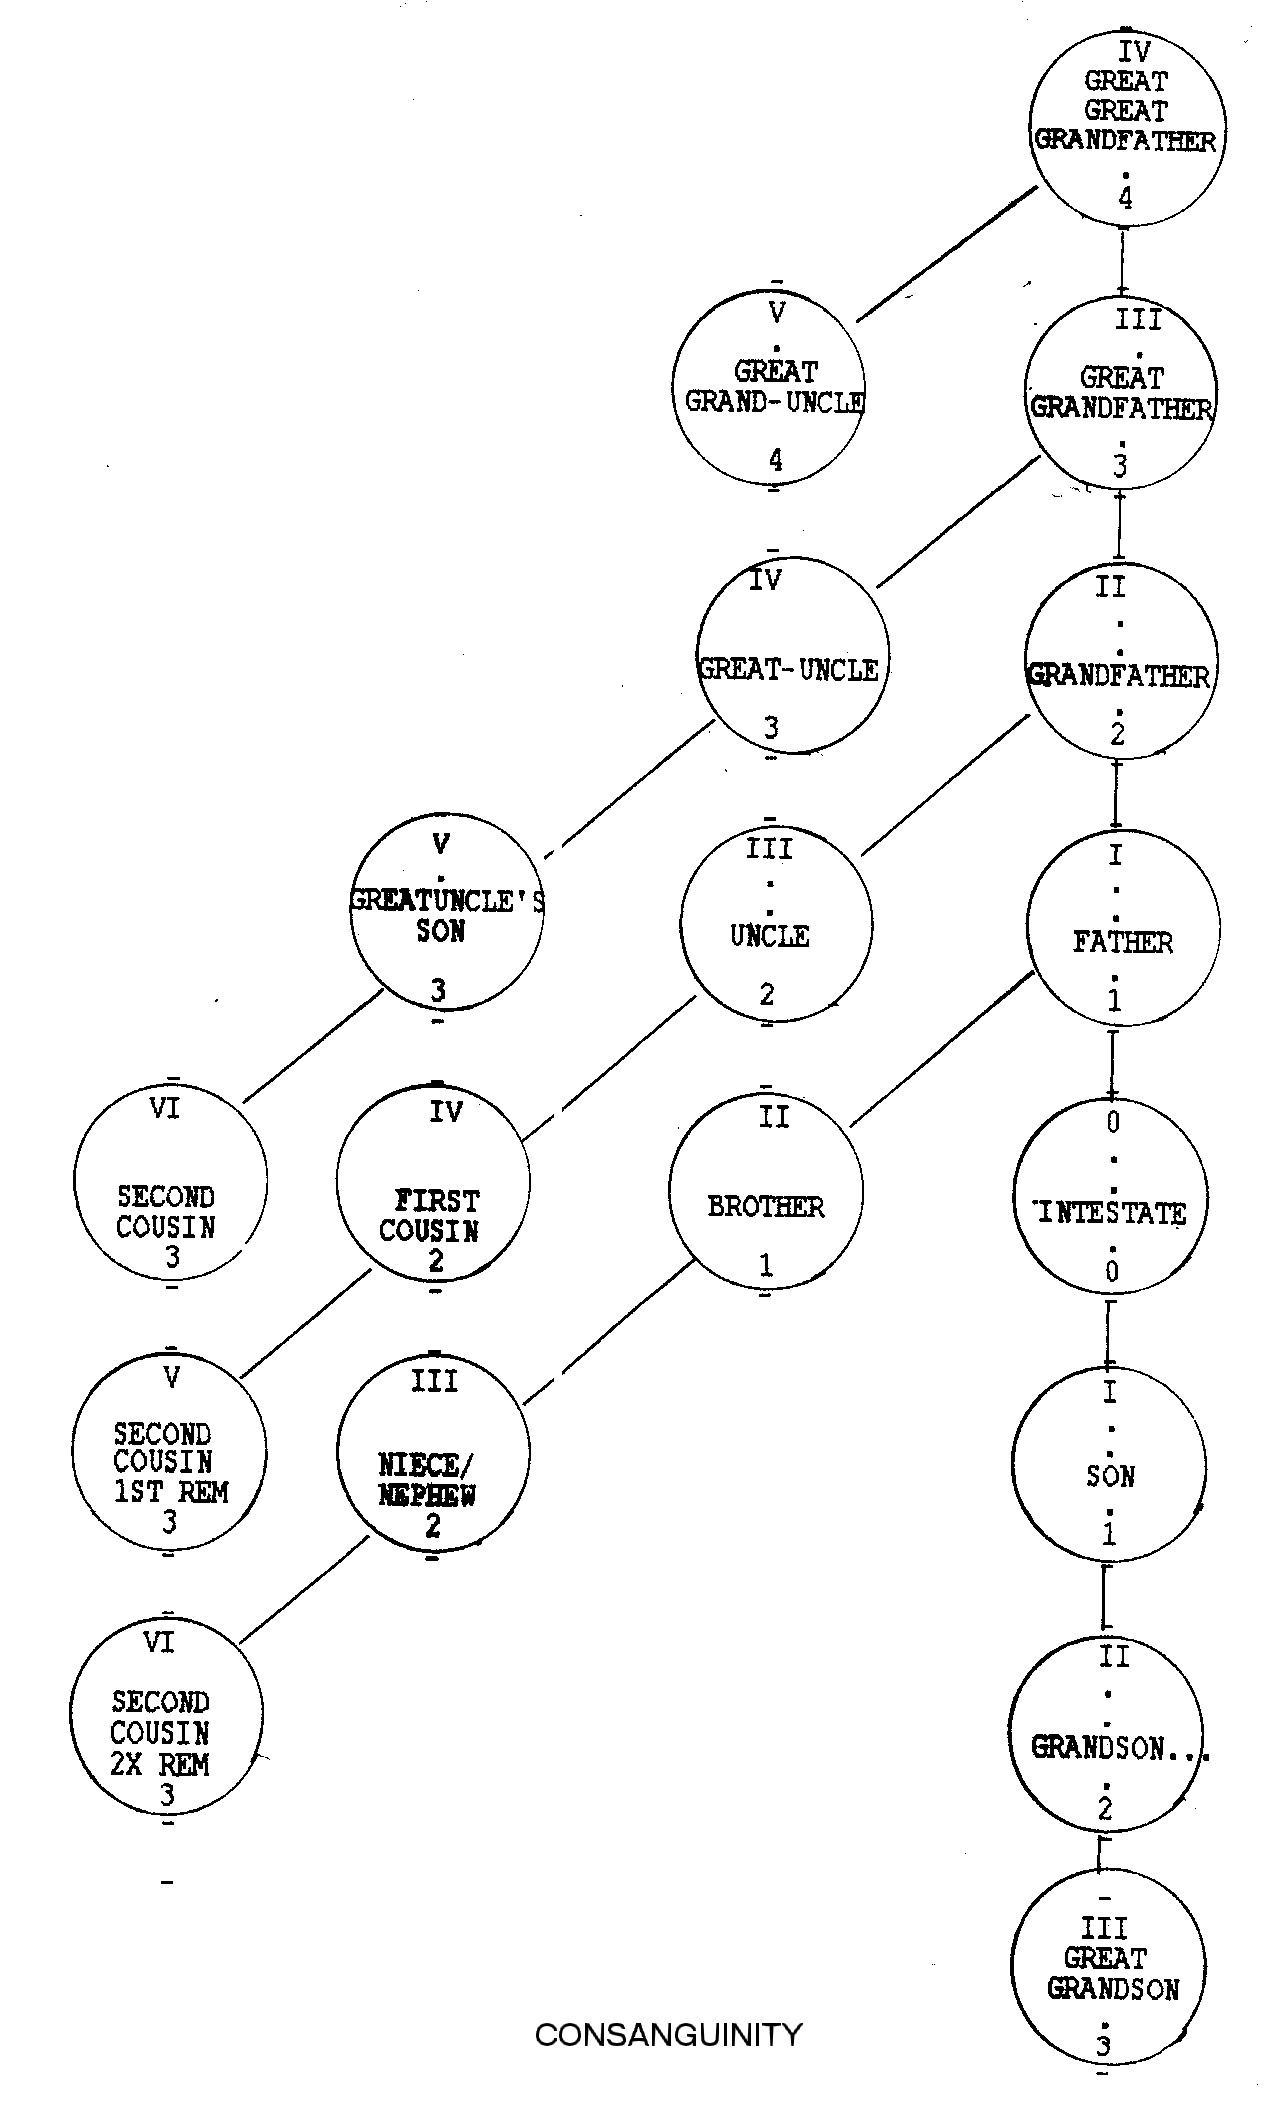 Consanguinity Chart